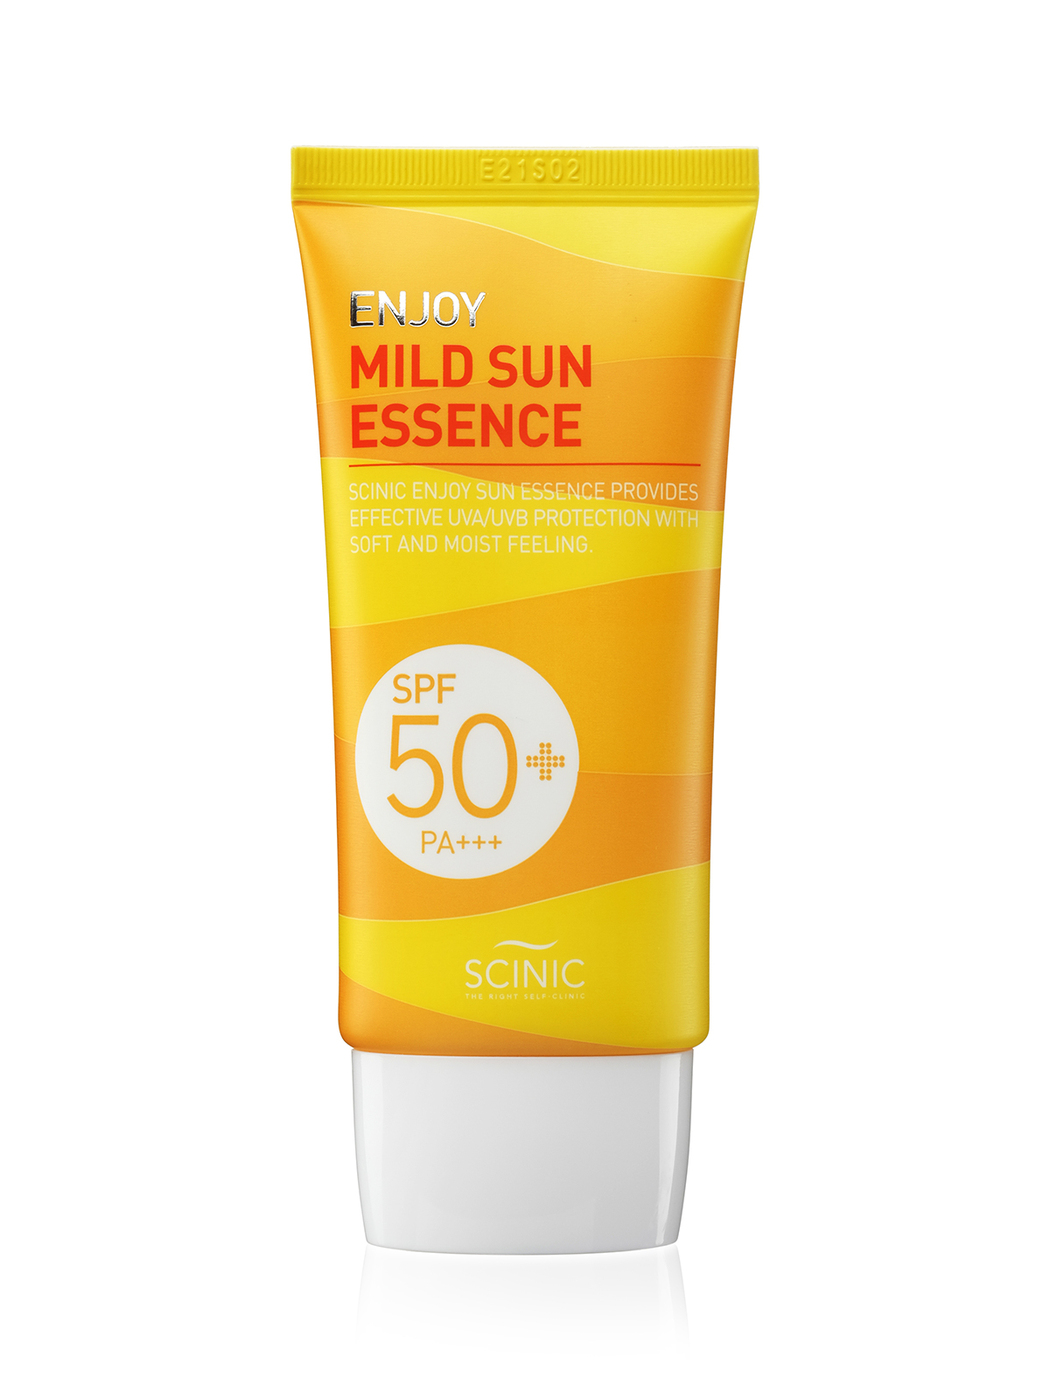 Essence spf. Essence spf50+. Scinic enjoy mild Sun Essence ex spf50+ pa++++ солнцезащитная эссенция. Солнцезащитный крем для кожи лица и тела (SPF 50 pa+++) Scinic. Scinic enjoy perfect Daily Sun Cream.